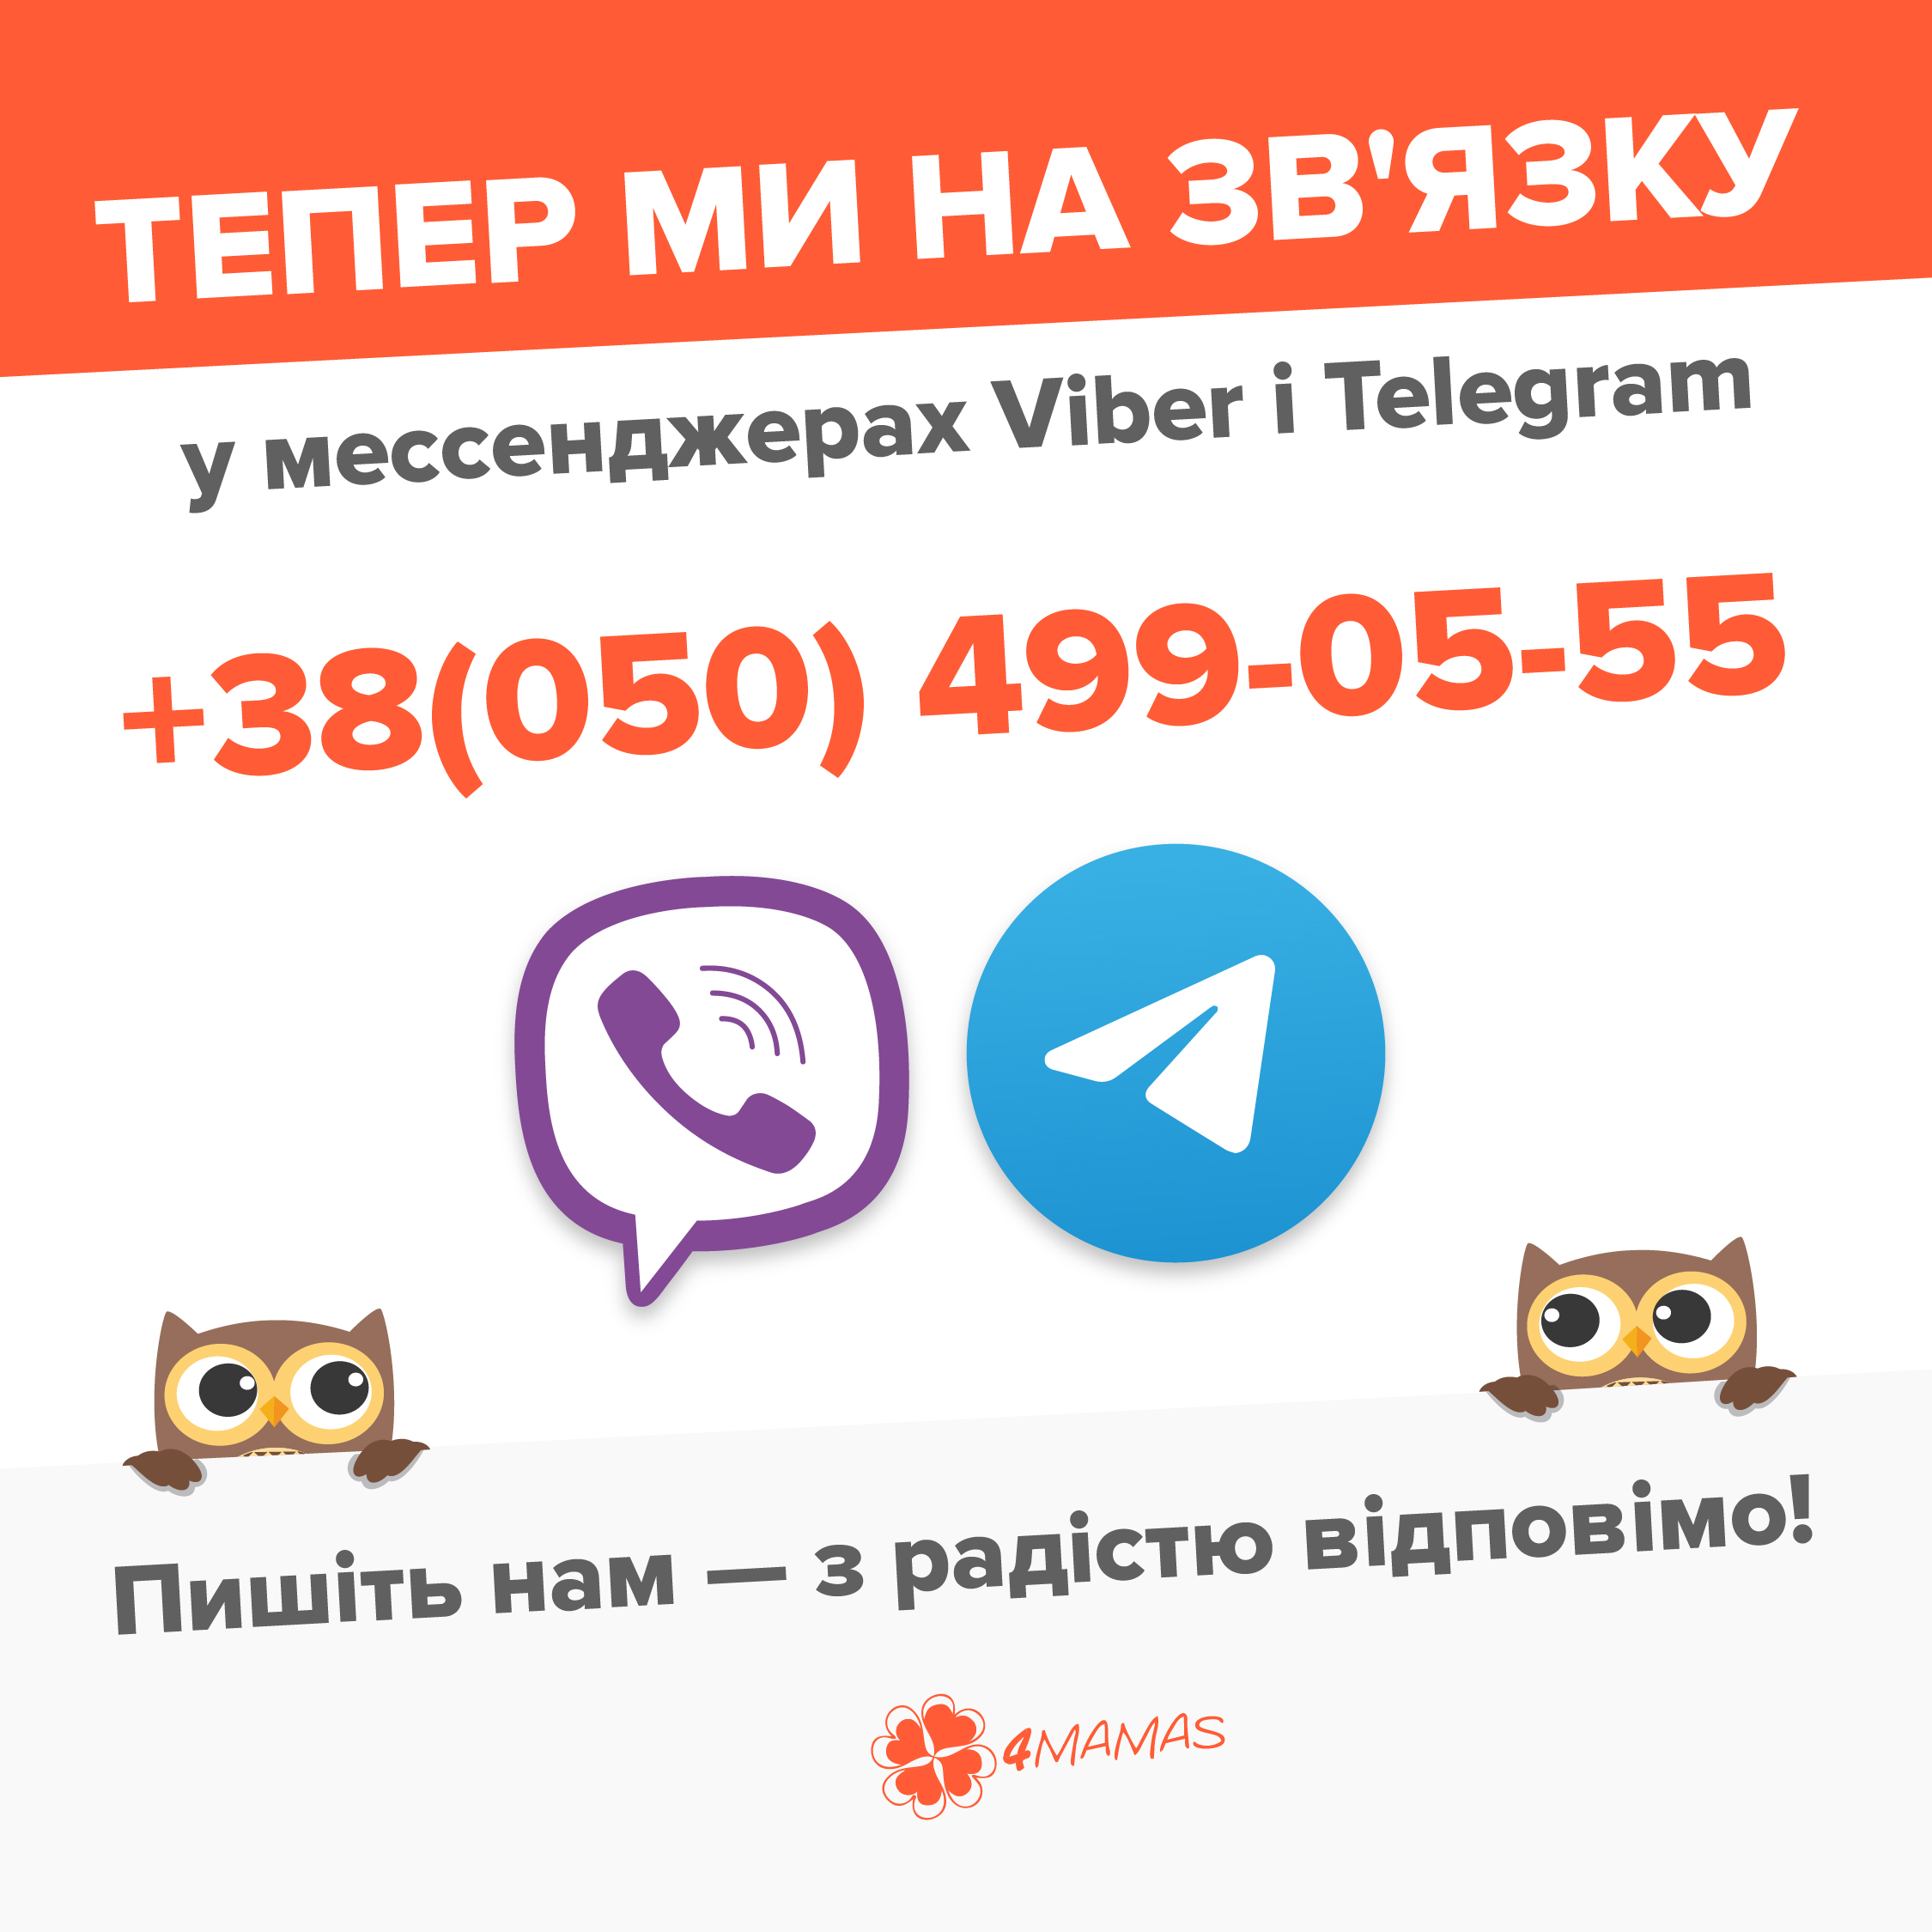 4mamas у Telegram та Viber!